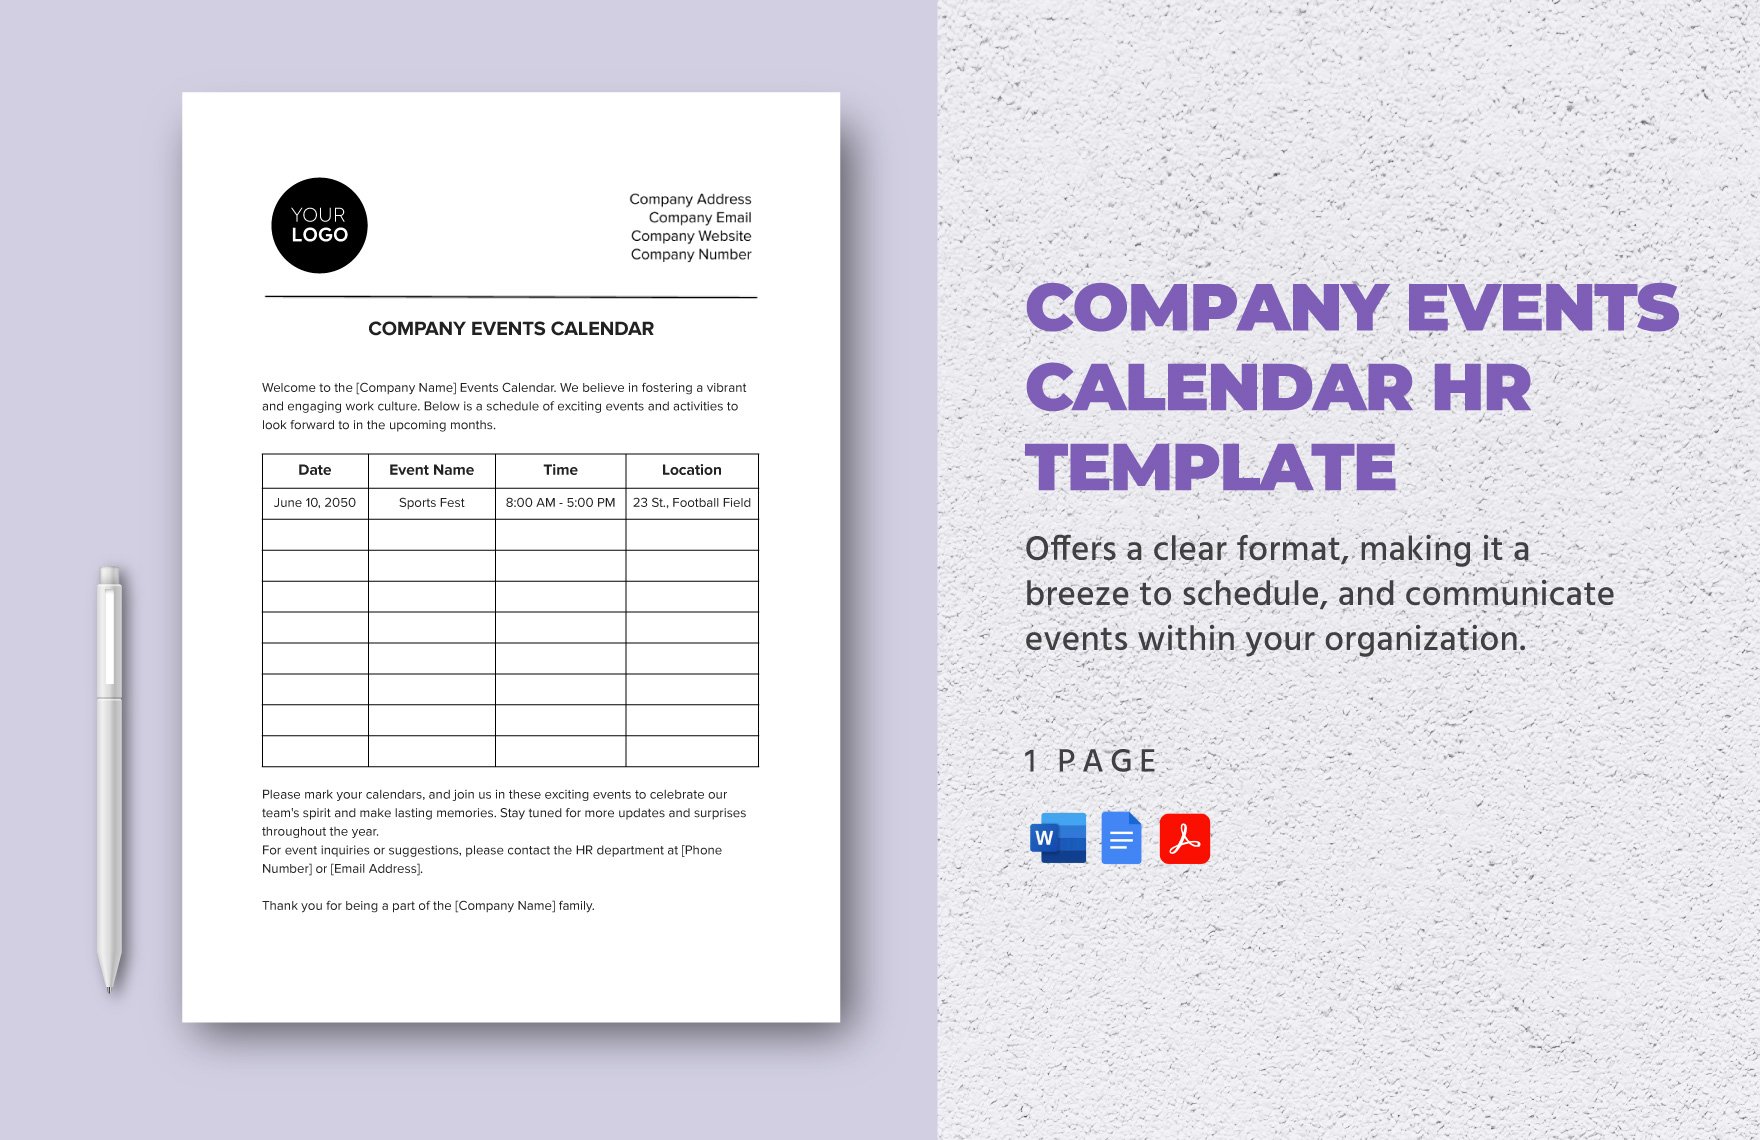 Company Events Calendar HR Template